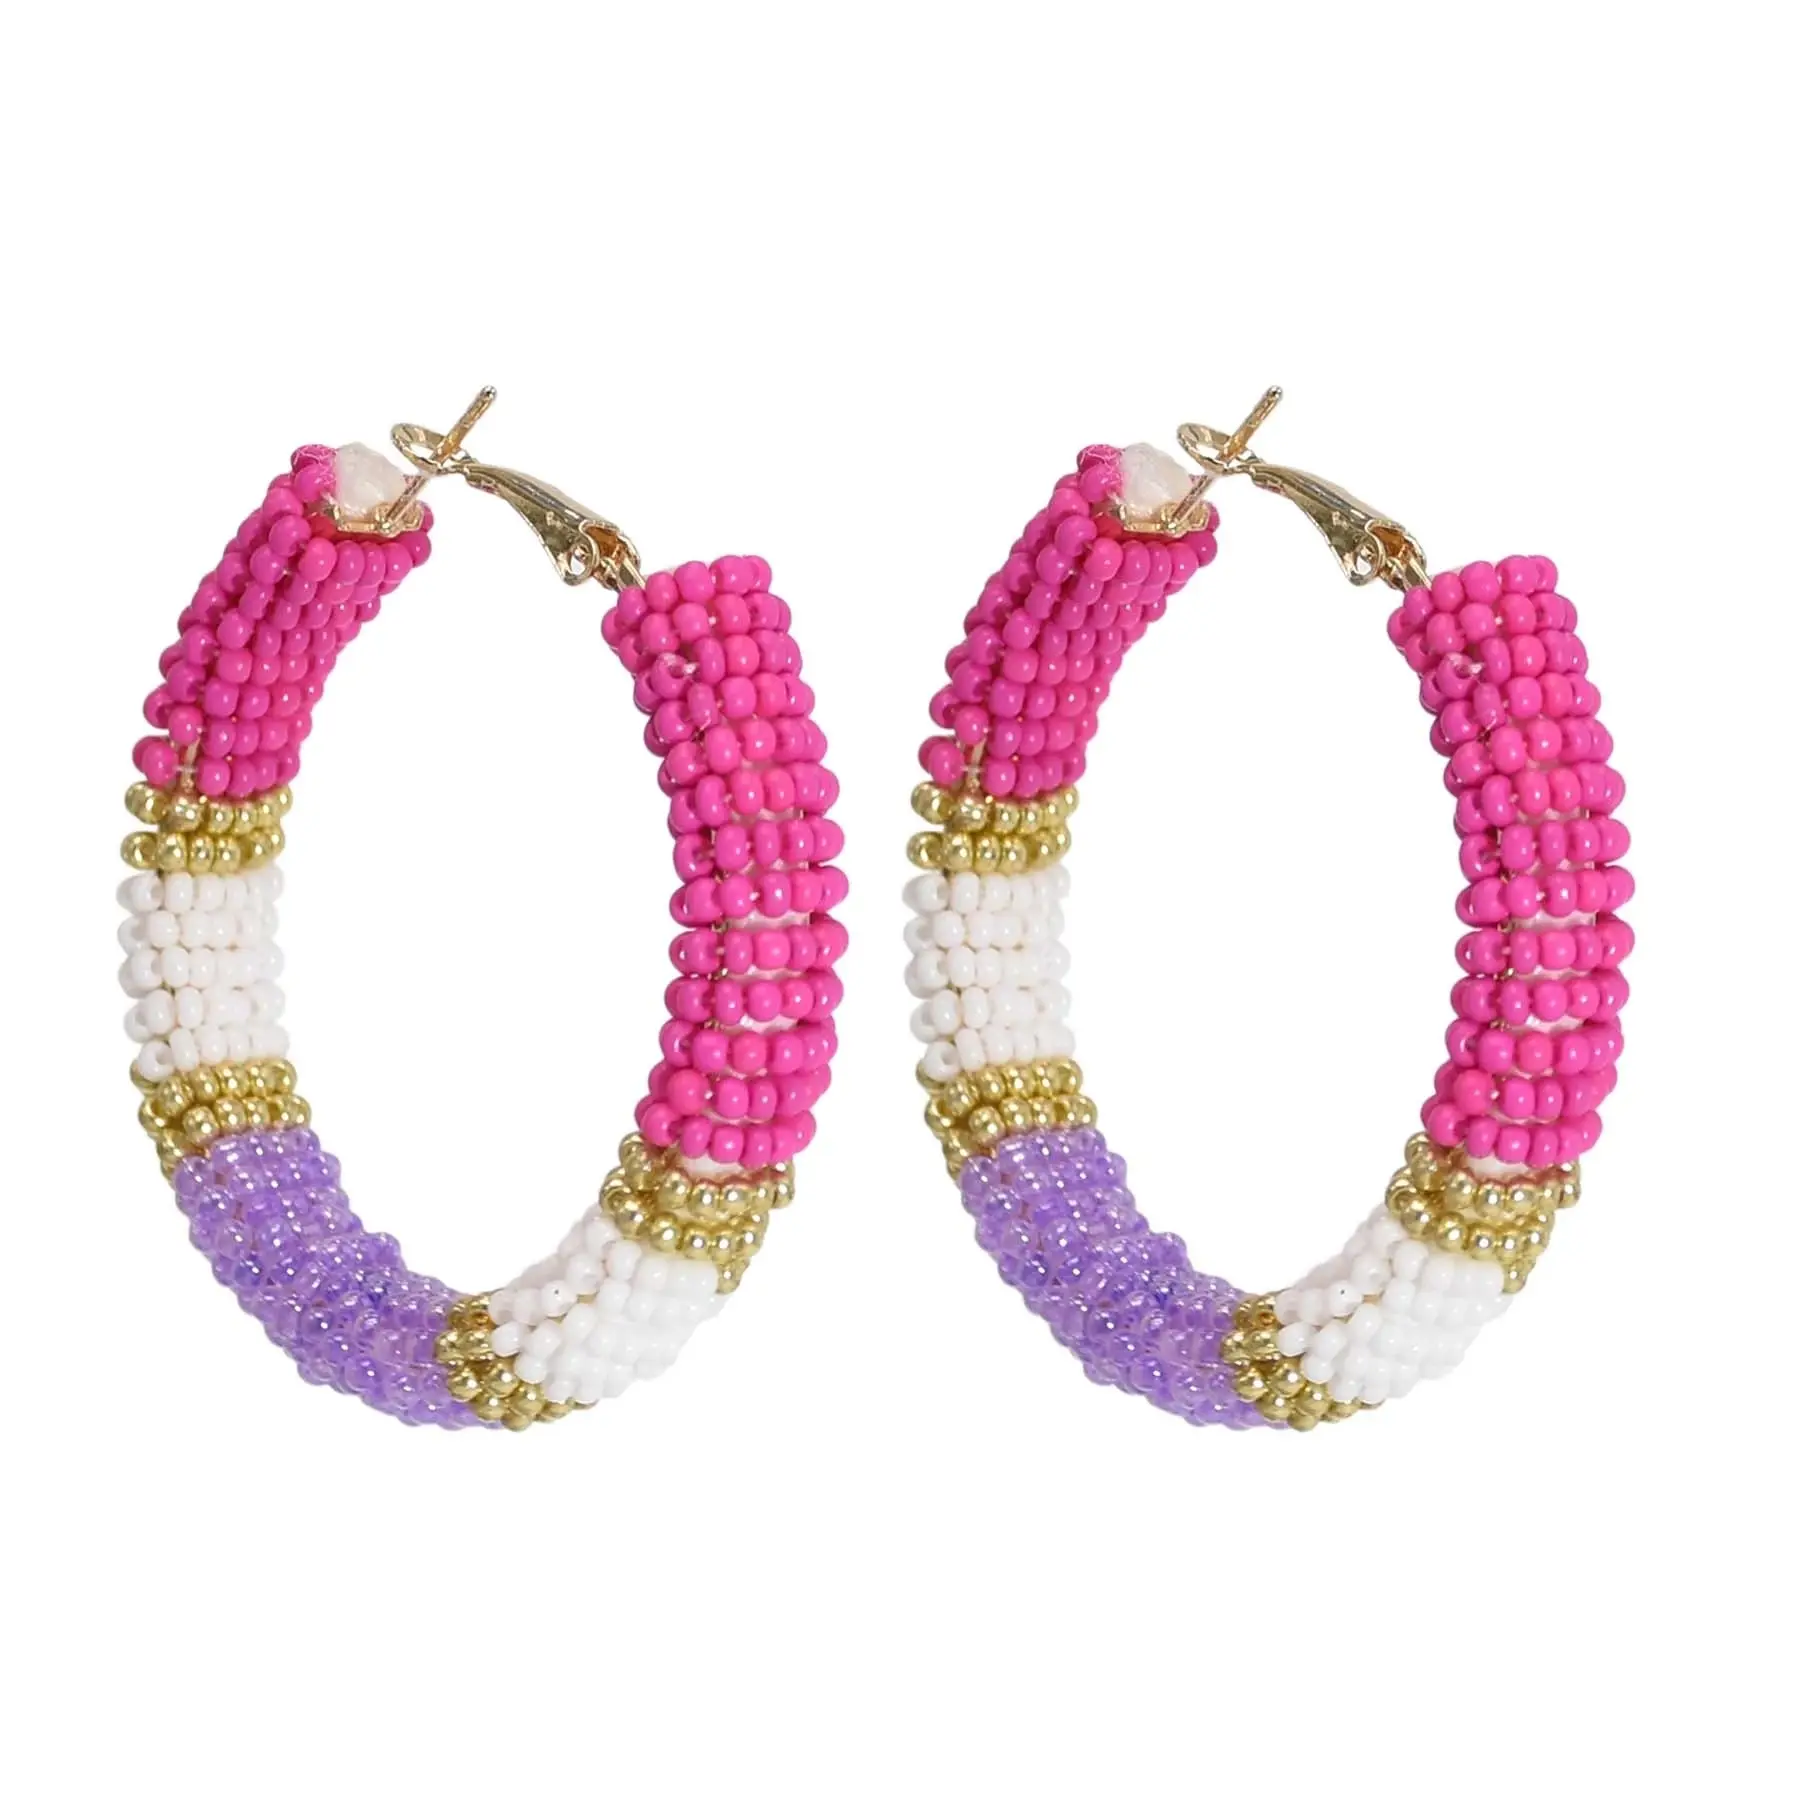 Jachon Bohemian Vintage Beaded Hoop Earring Jewelry Alloy Handmade Colorful Beaded Earring